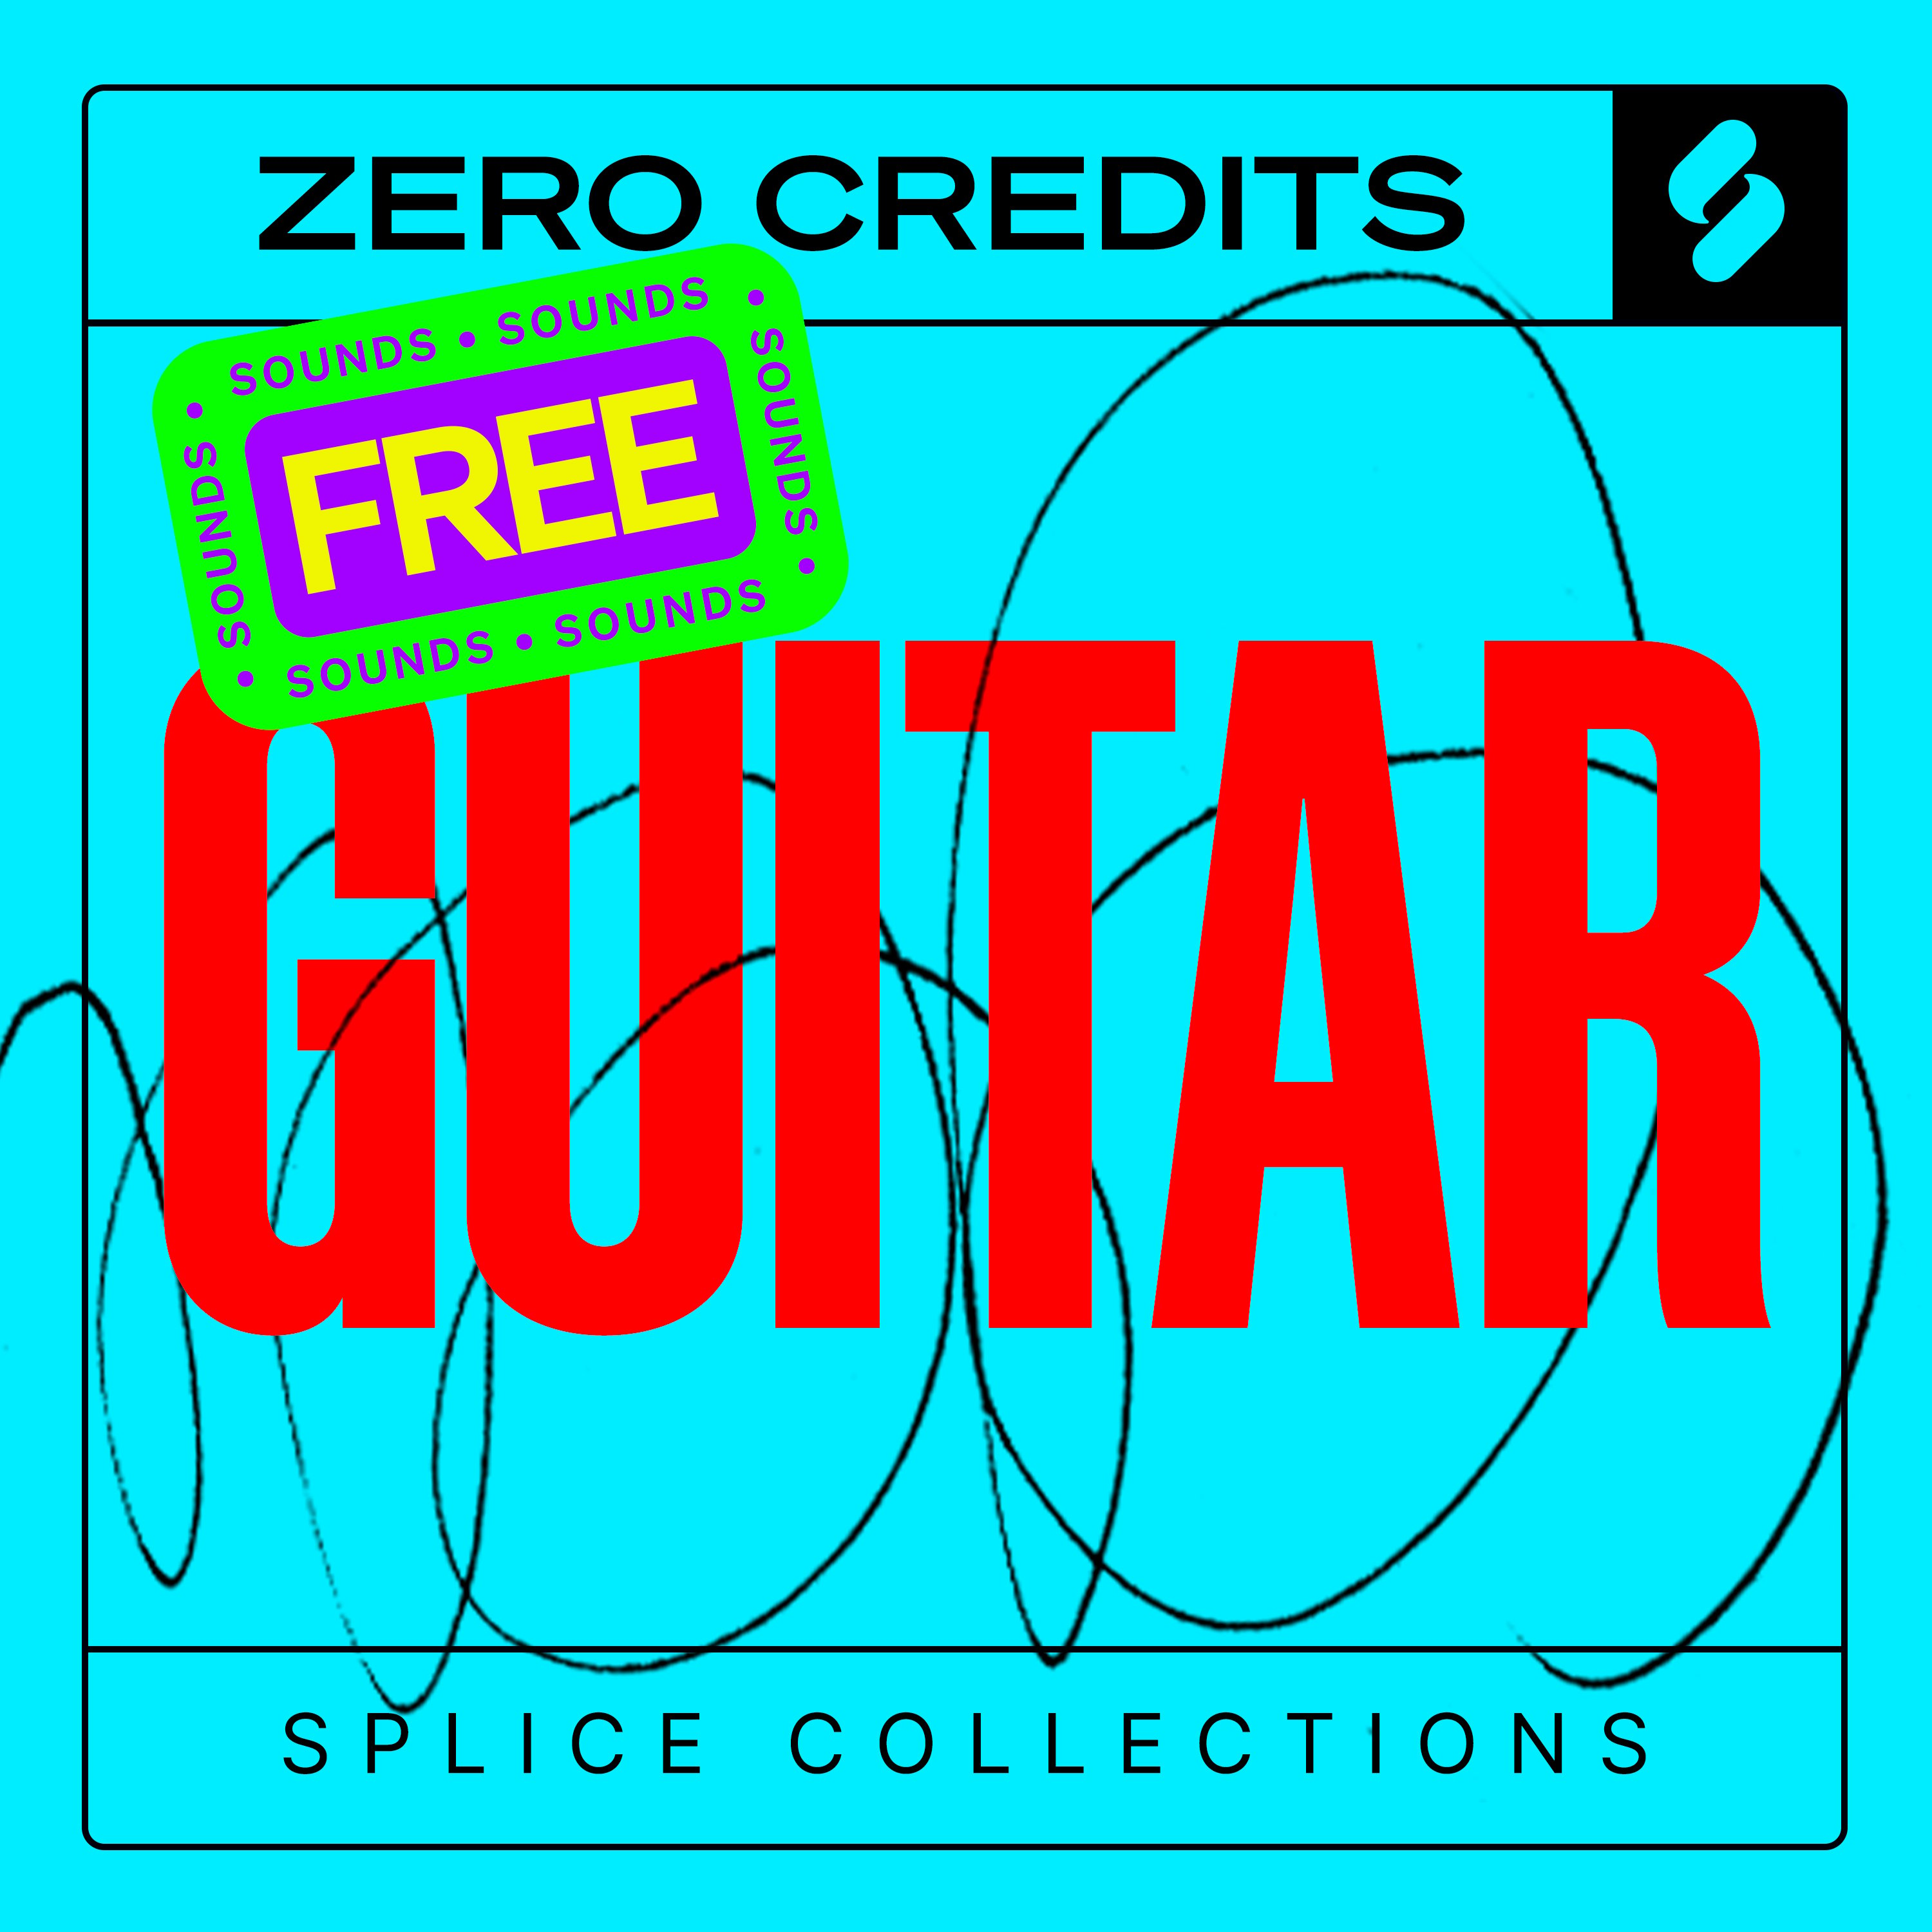 Free sounds: Guitars